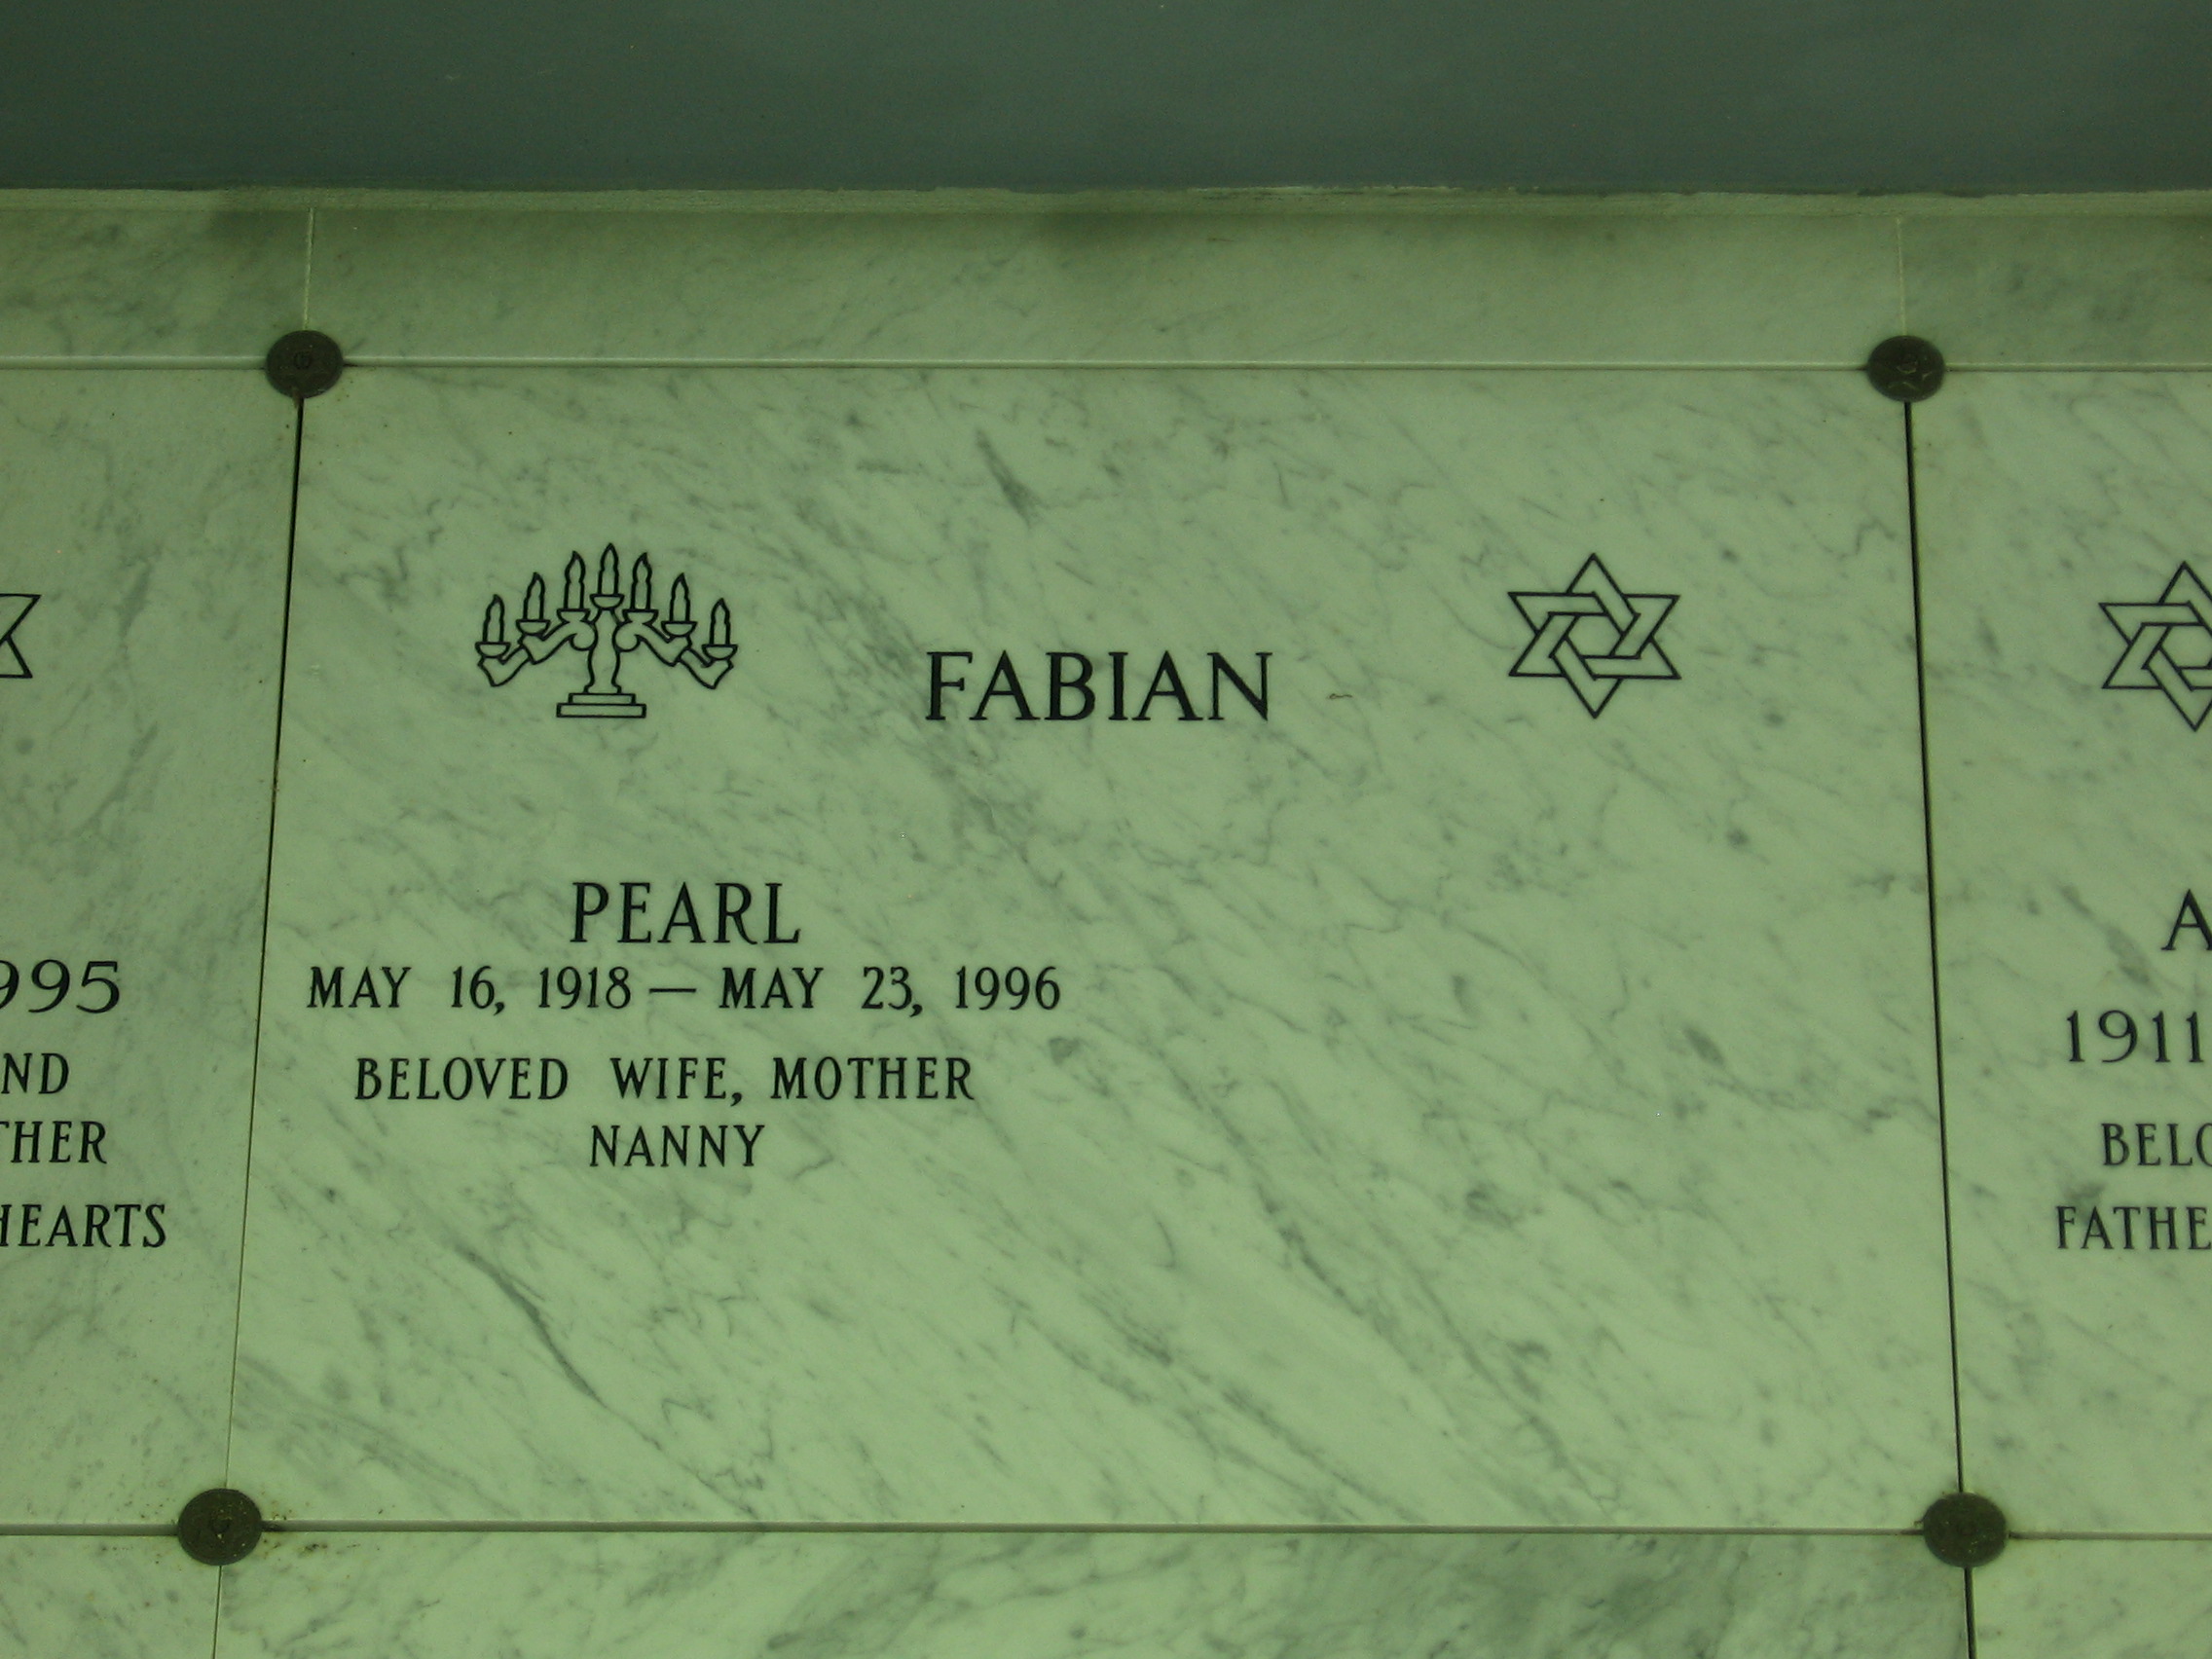 Pearl Fabian